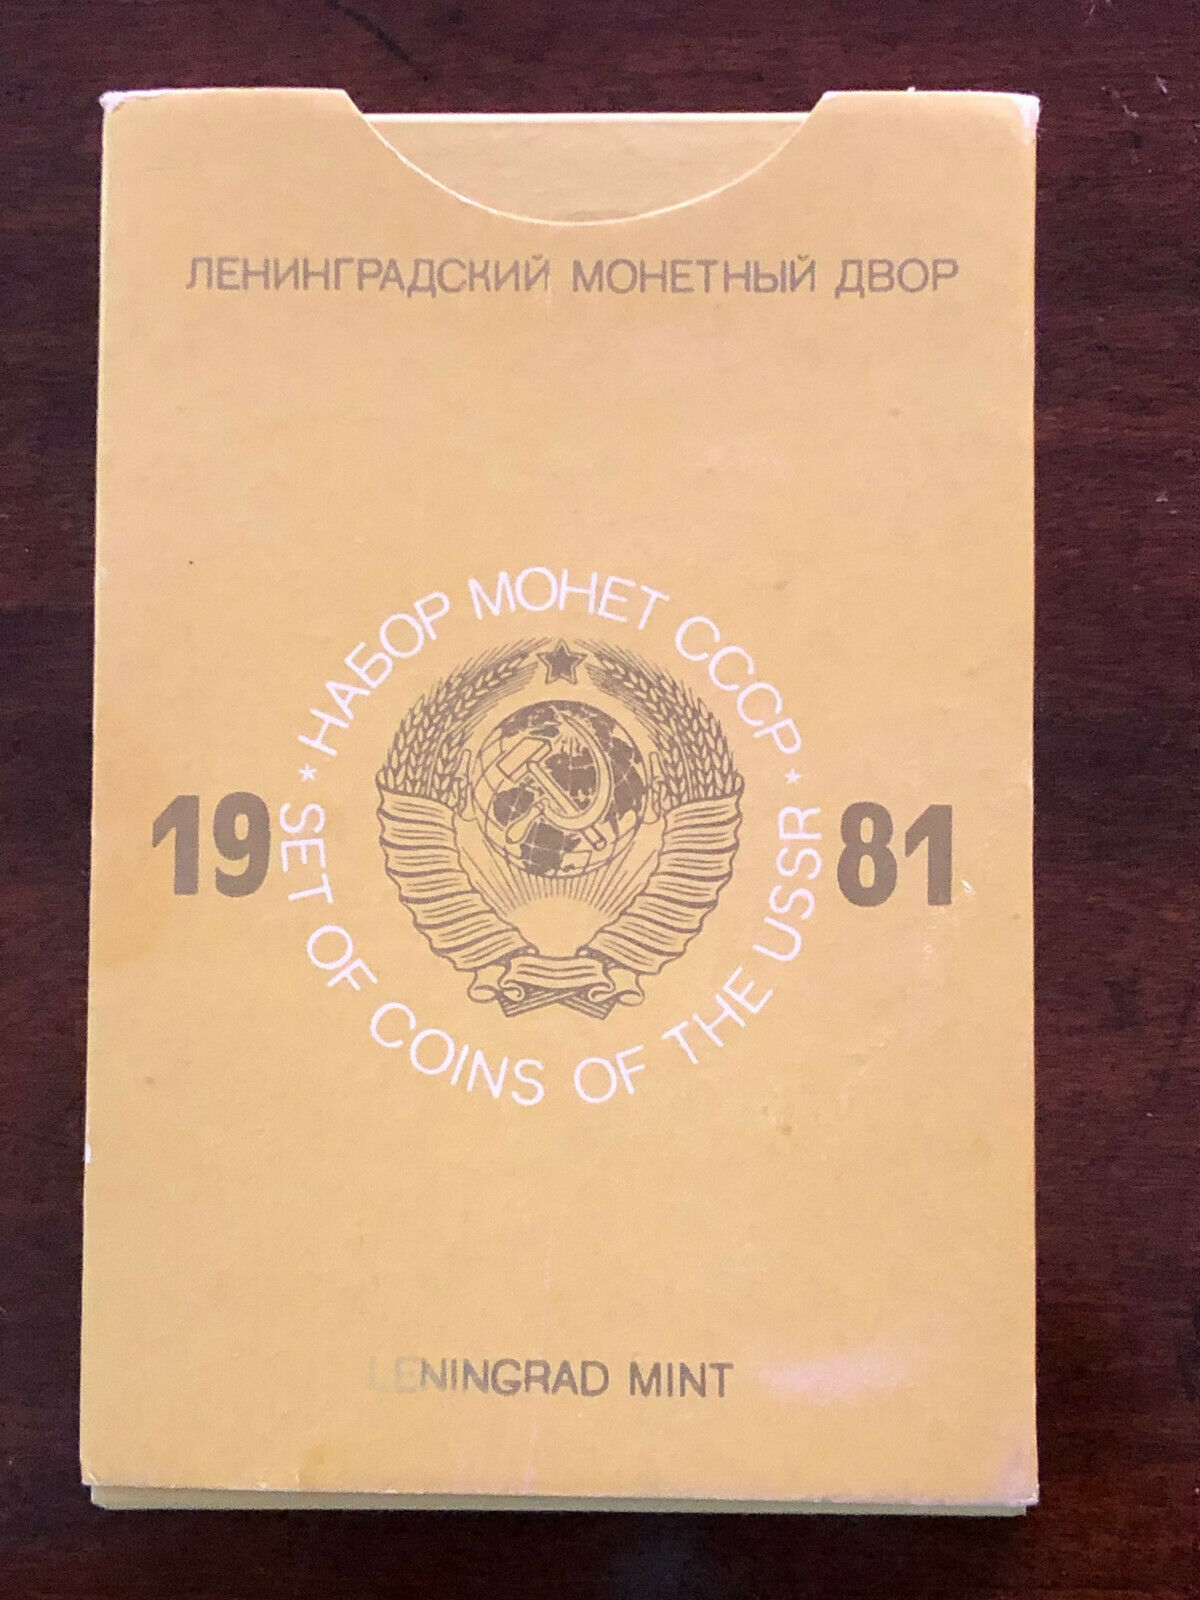 Russia Cccp Proof Like Coin Mint Set 1981 Roubles Kopeks Leningrad Mint Medal